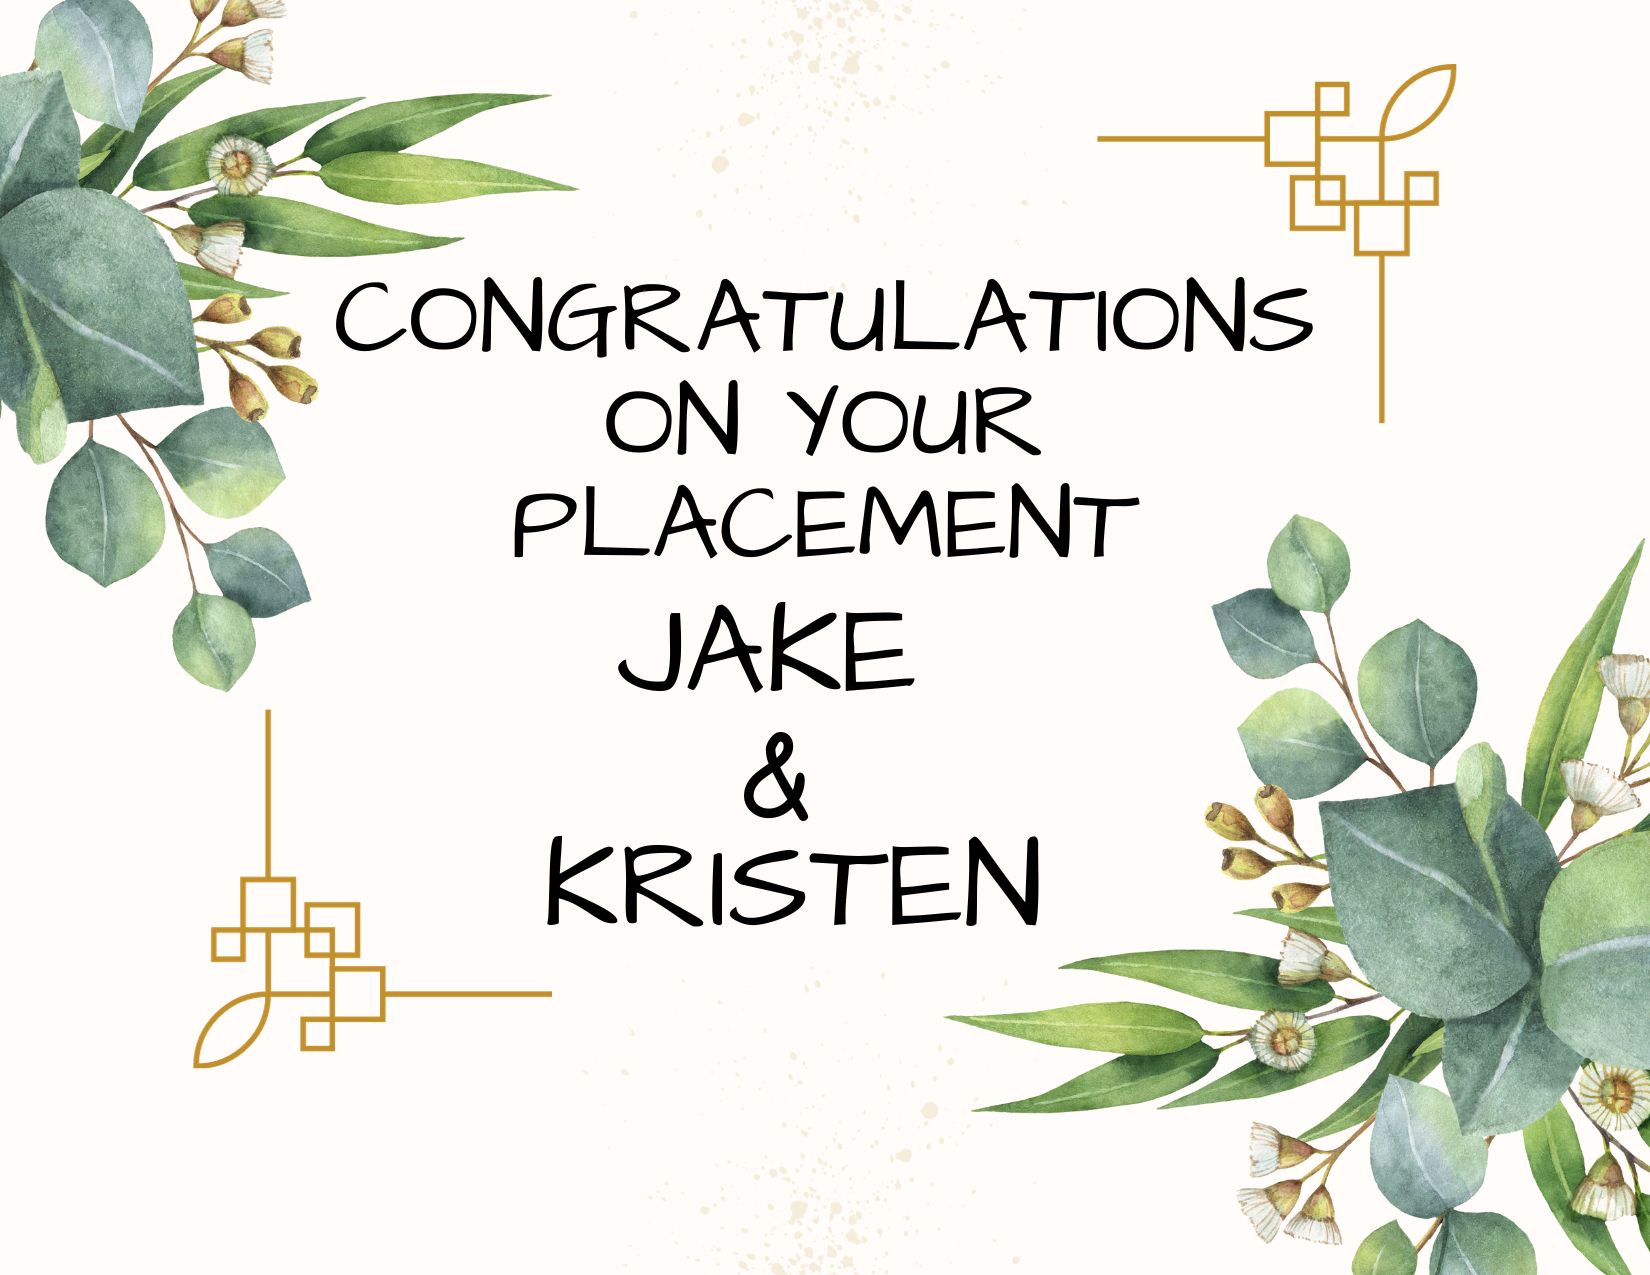 Jake & Kristen